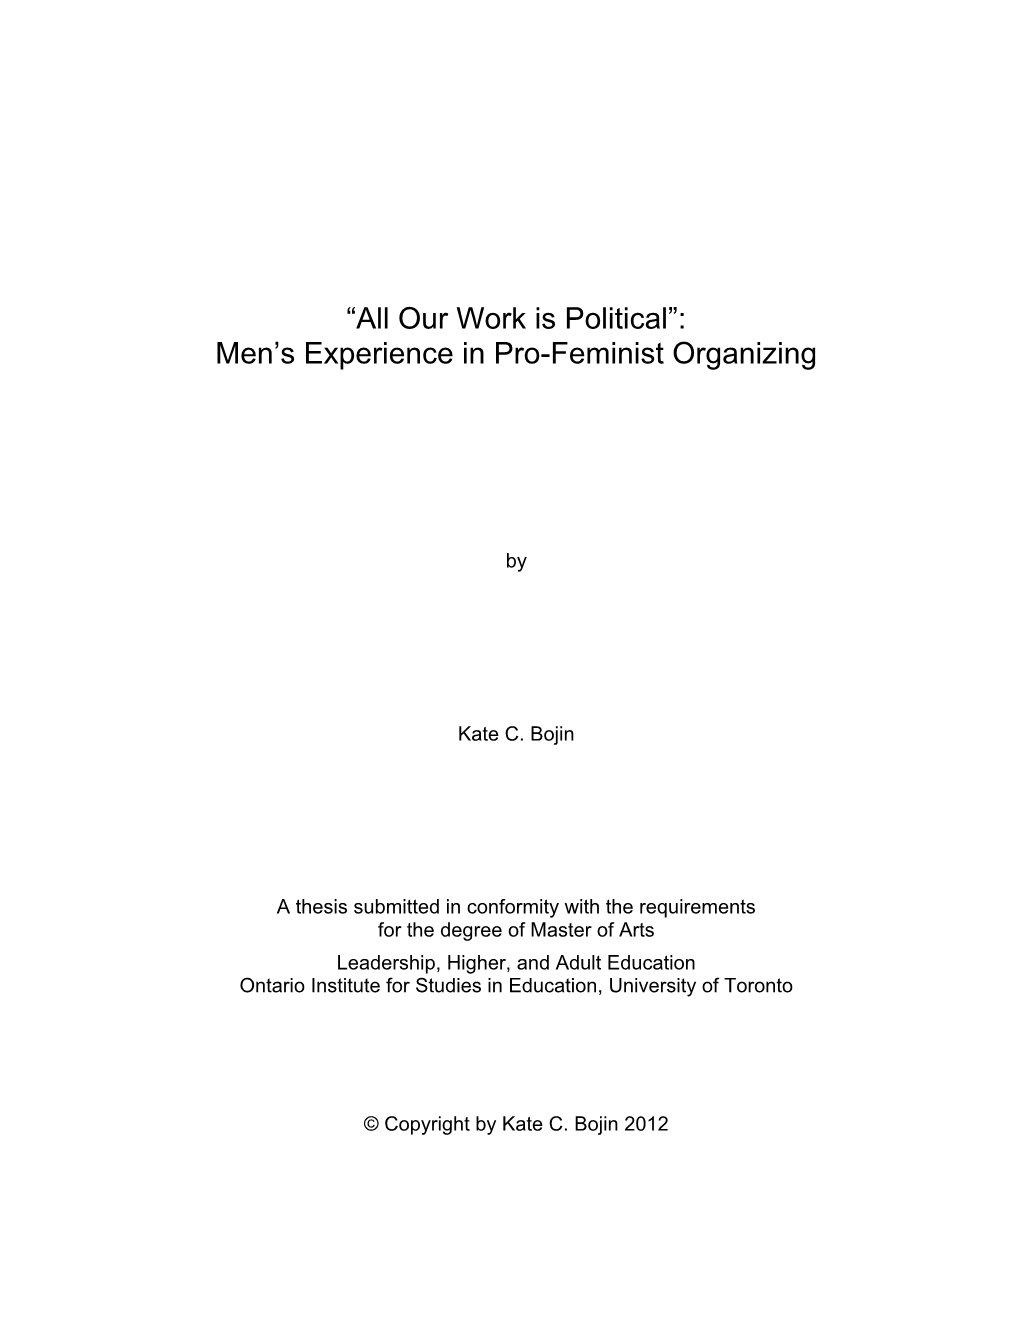 Men's Experience in Pro-Feminist Organizing